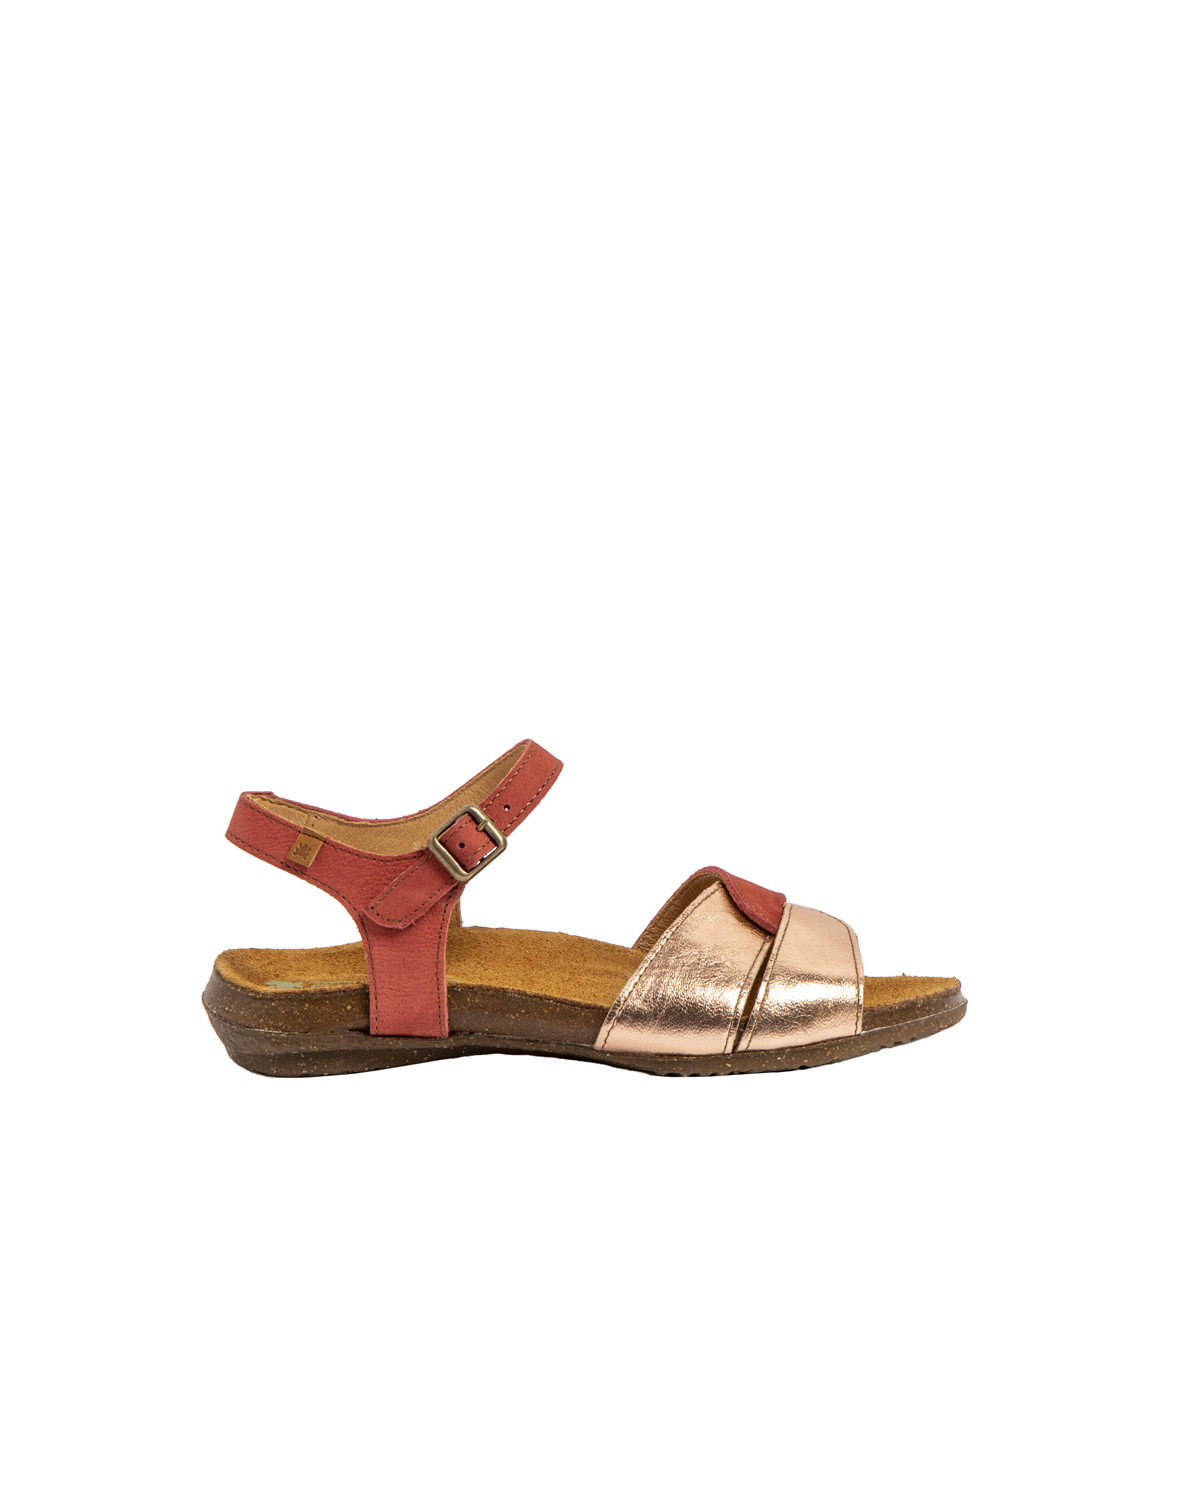 Sandales confortables plates en cuir et daim - Rose - El naturalista